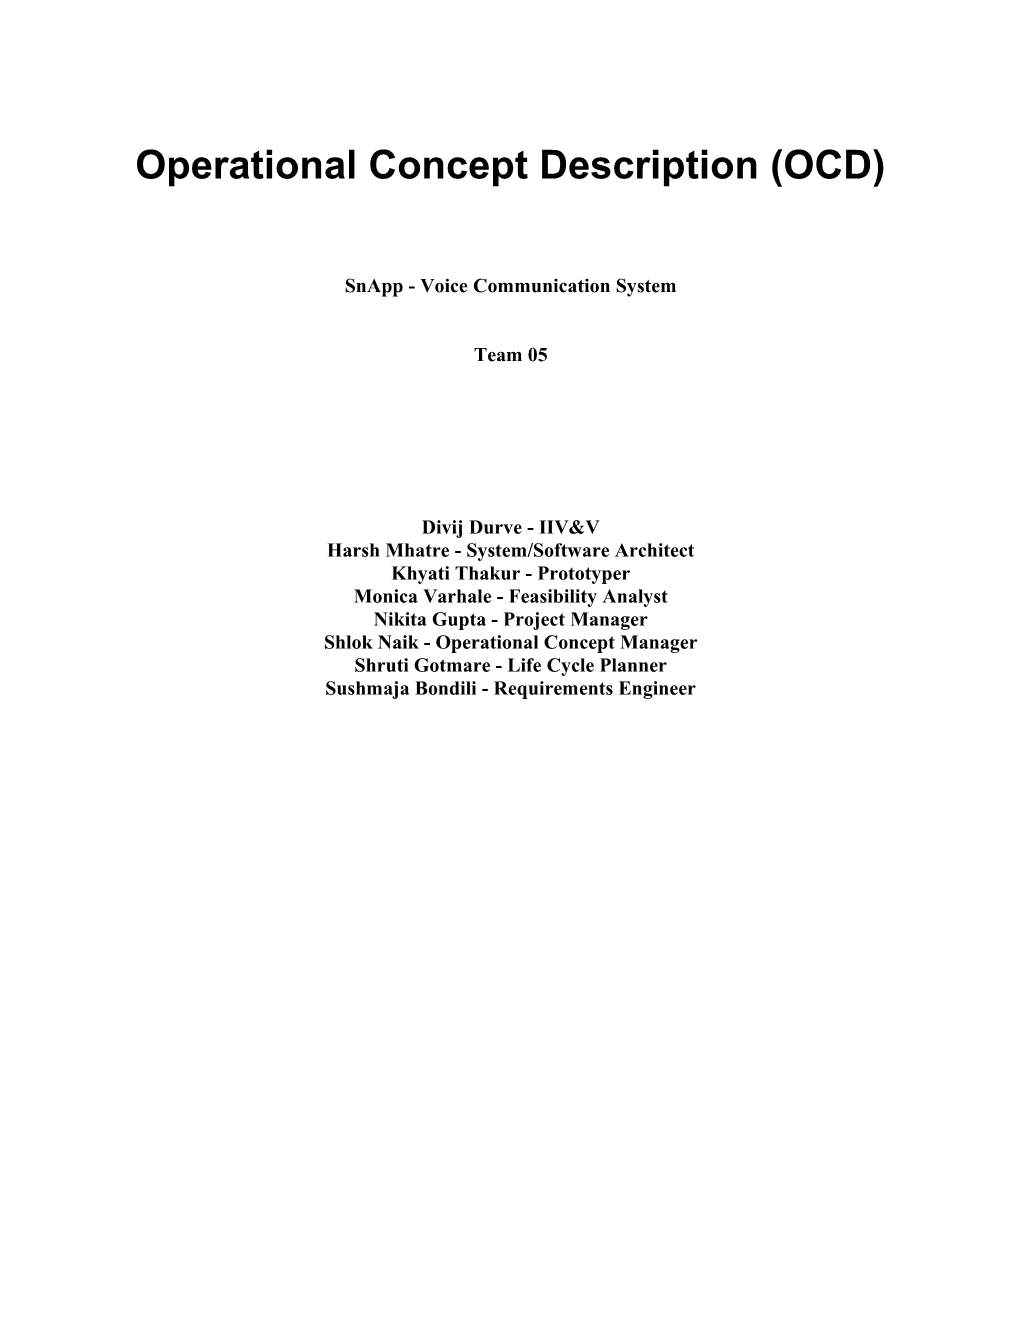 Operational Concept Description (OCD) s3